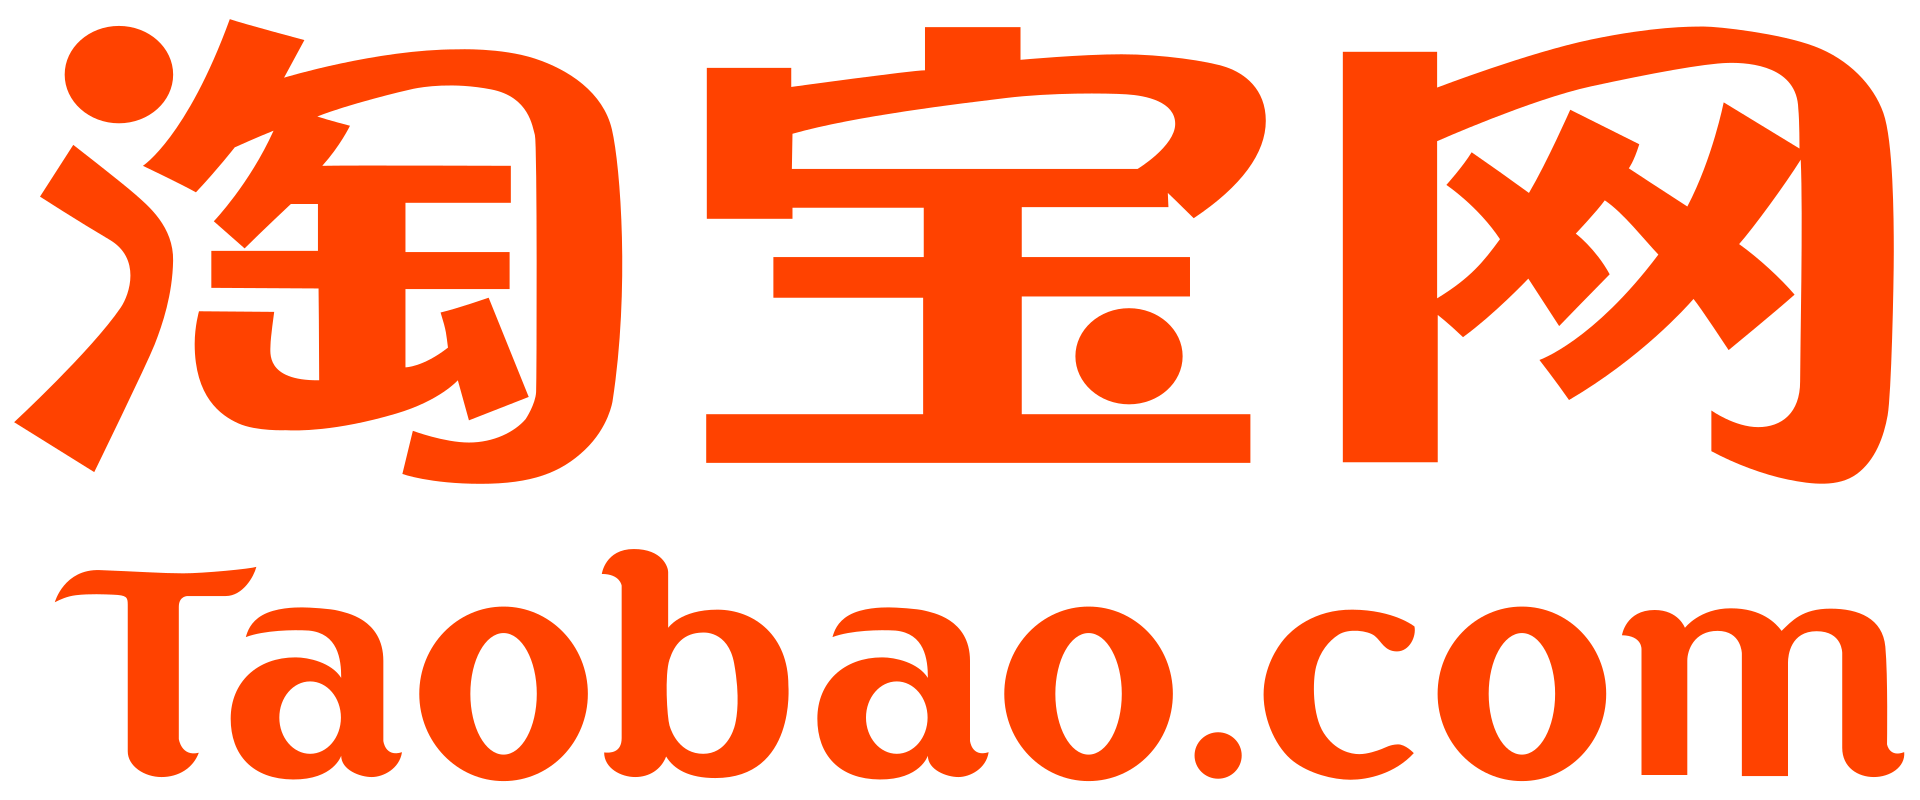 Alibaba Group - Taobao Tmall Commerce Group